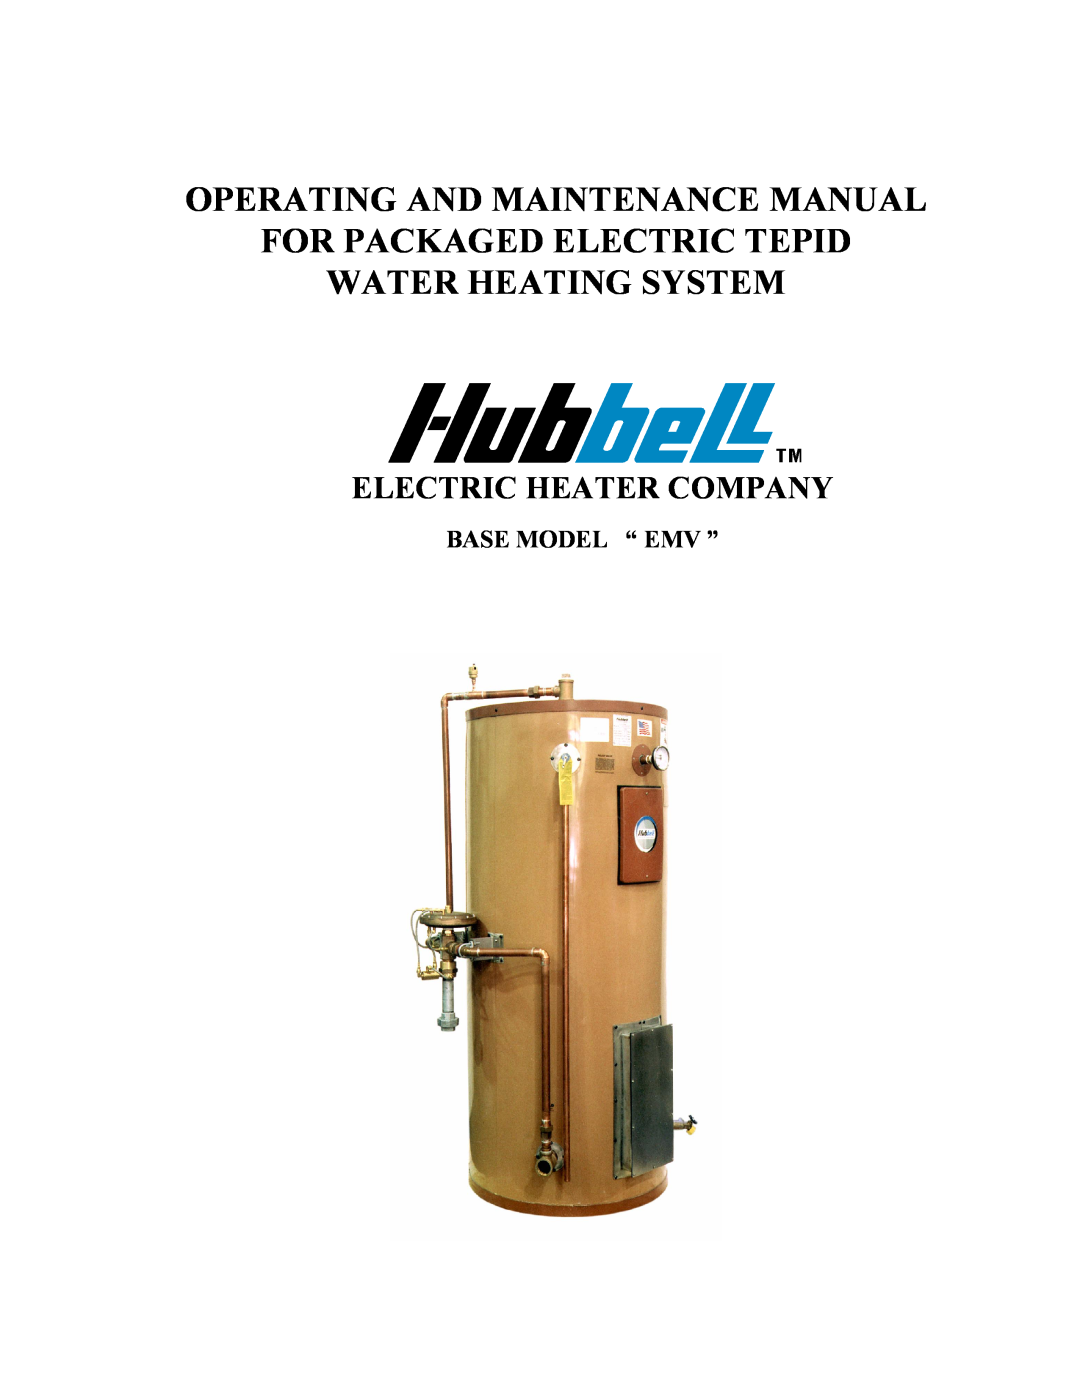 Hubbell Electric Heater Company EMV manual Base Model “ Emv ”, Operating And Maintenance Manual, Electric Heater Company 